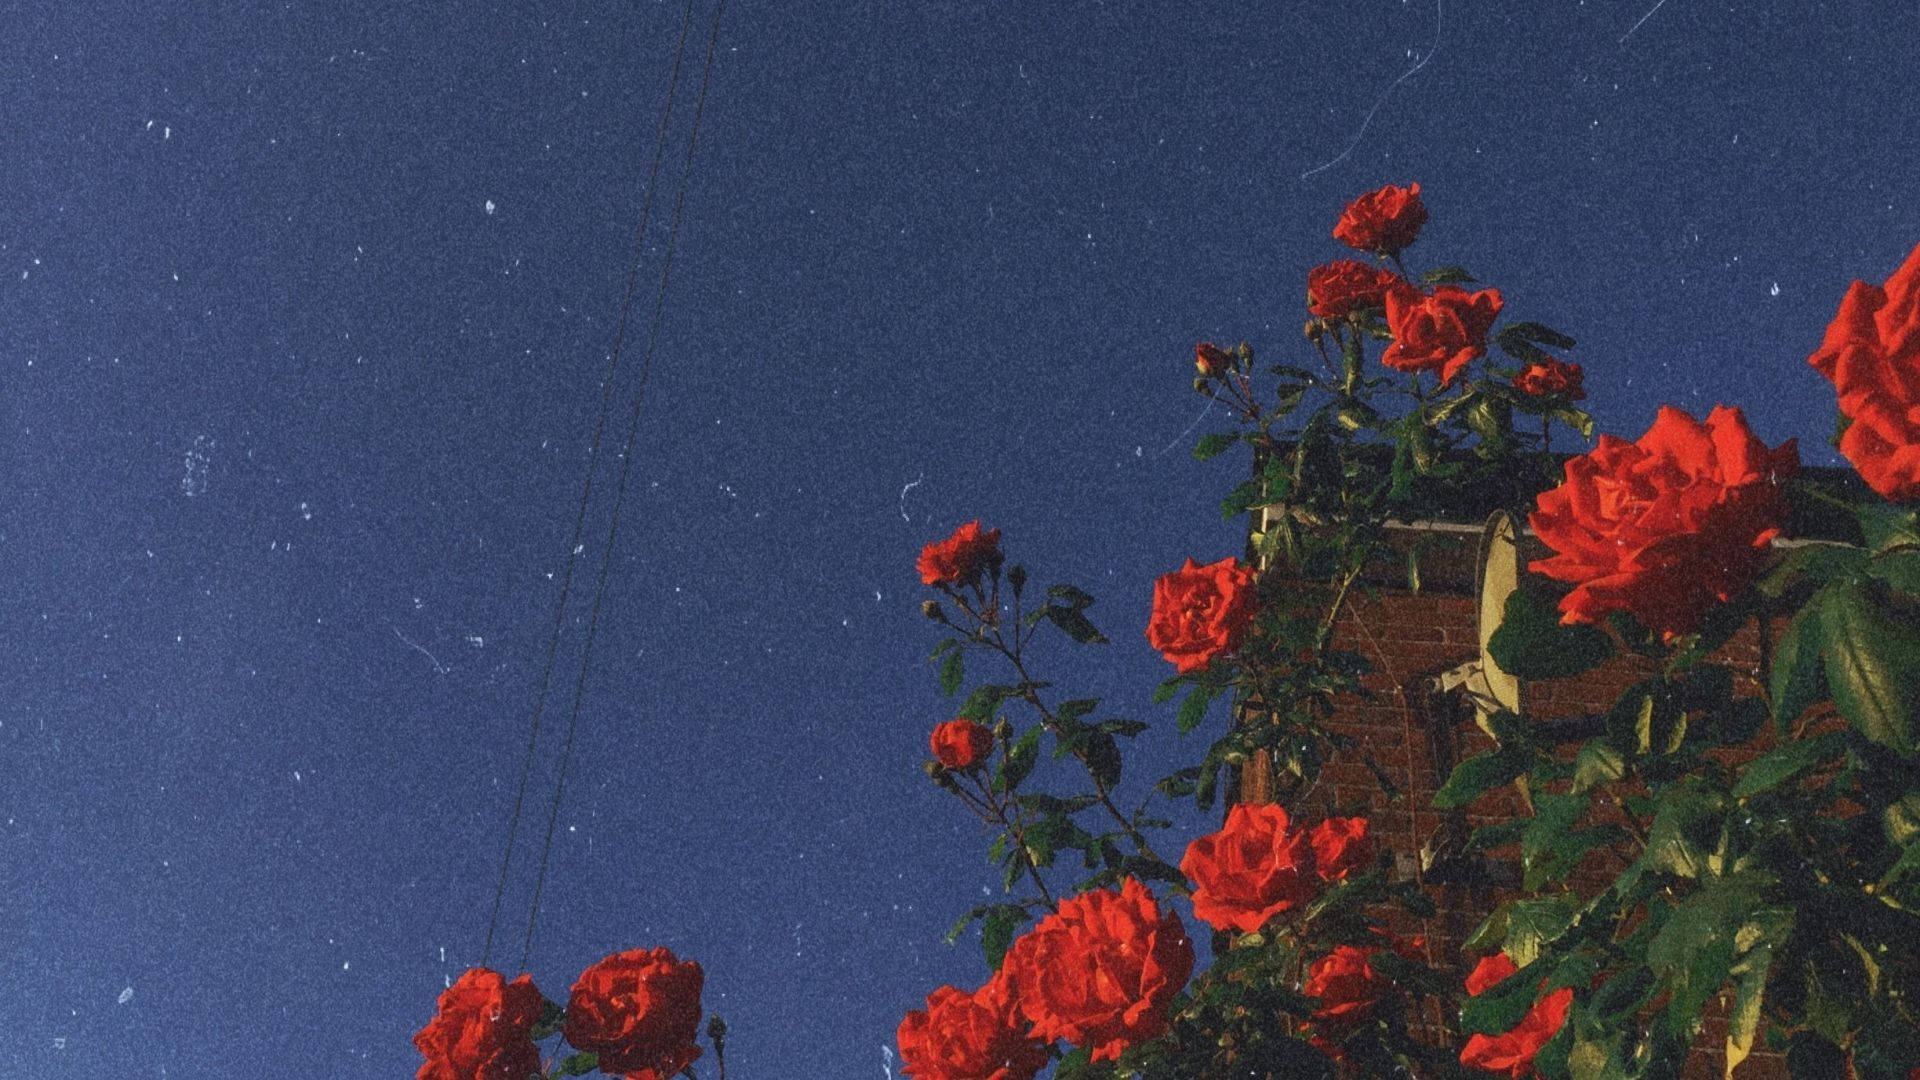 Aesthetic wallpaper red roses in the night sky - Roses, flower, retro, vintage